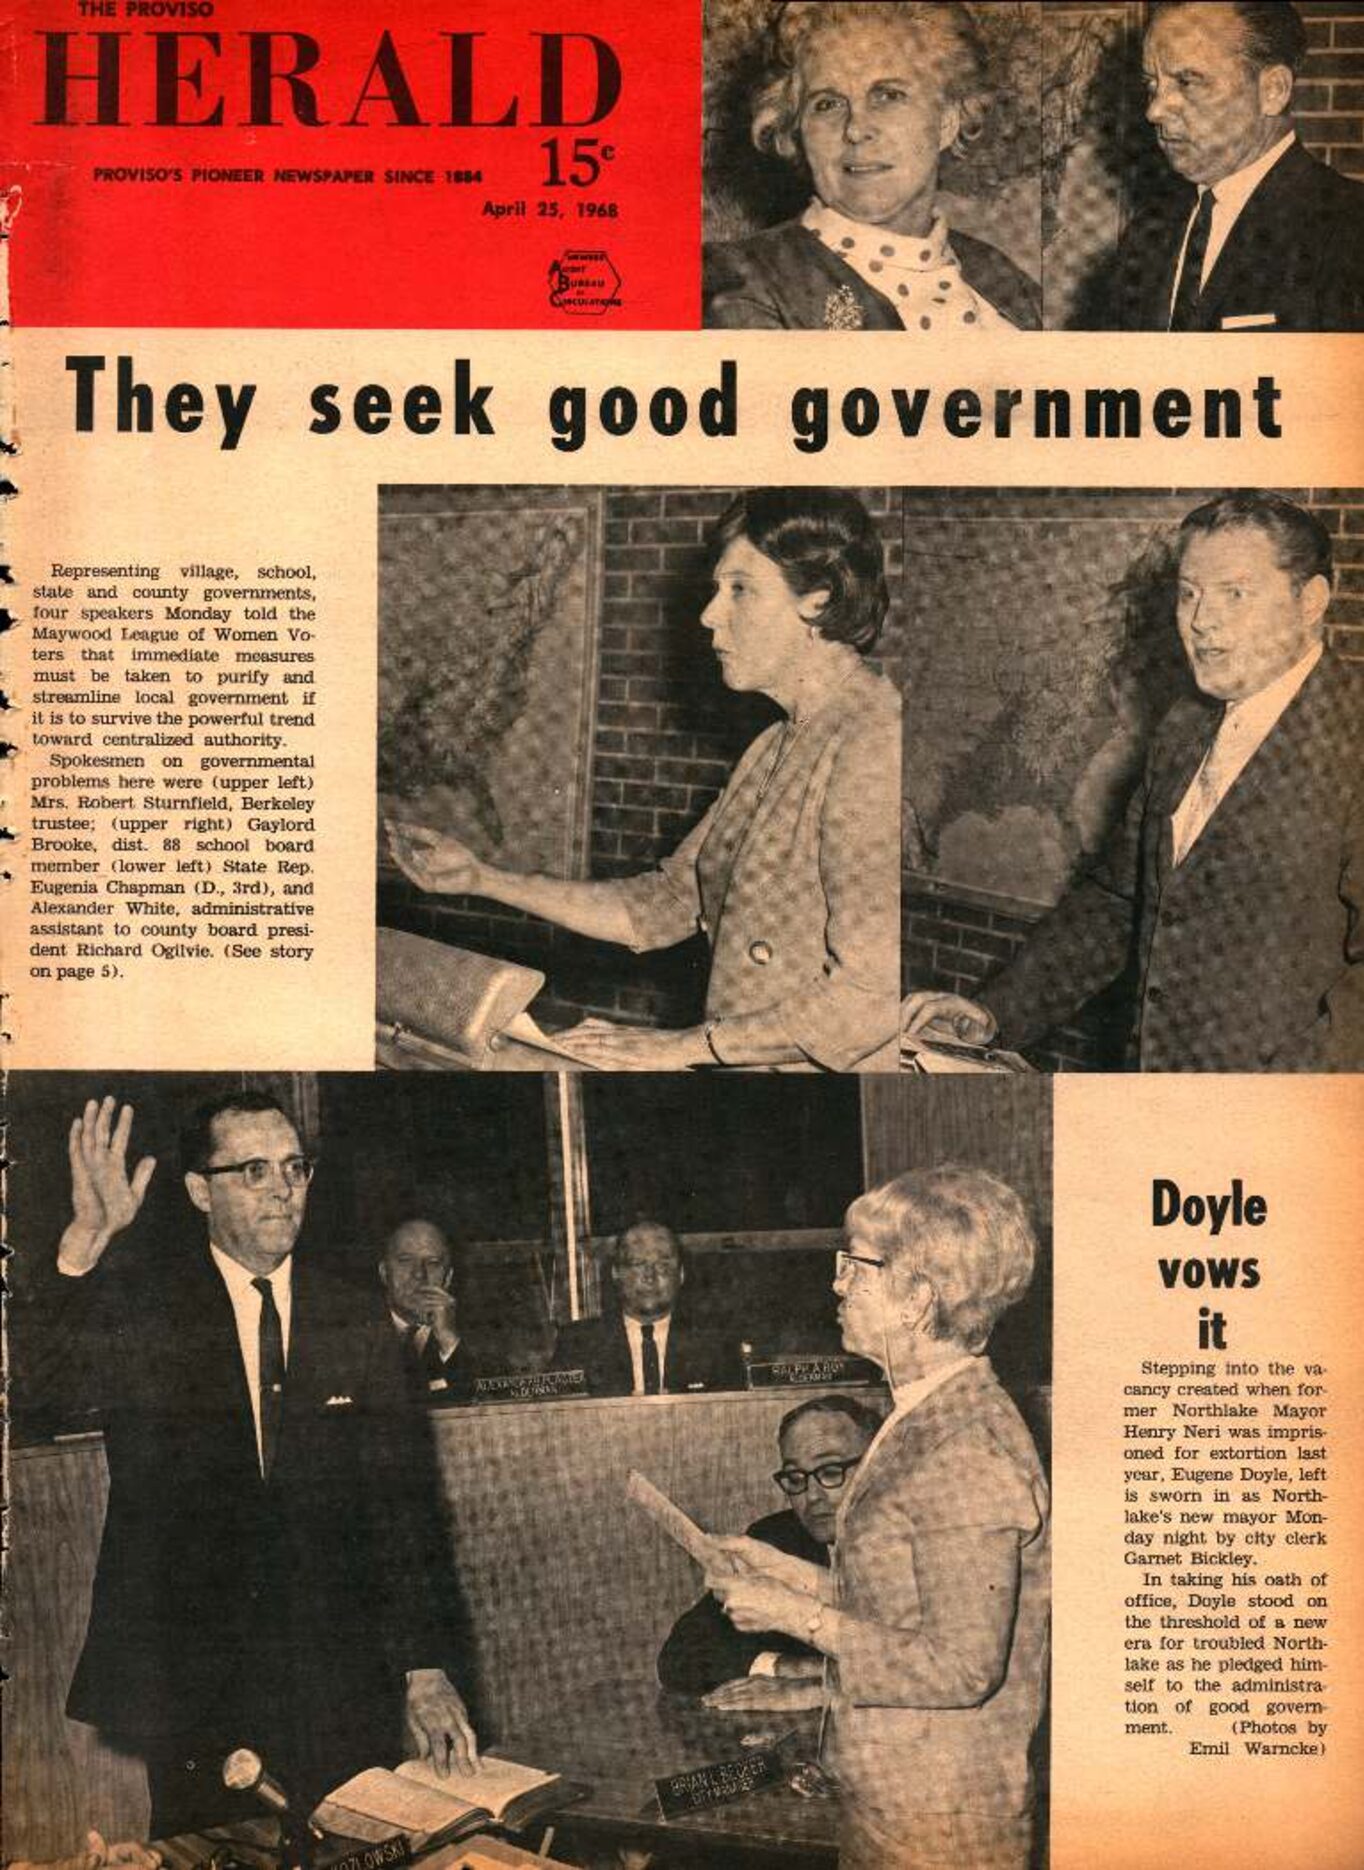 The Herald – 19680425